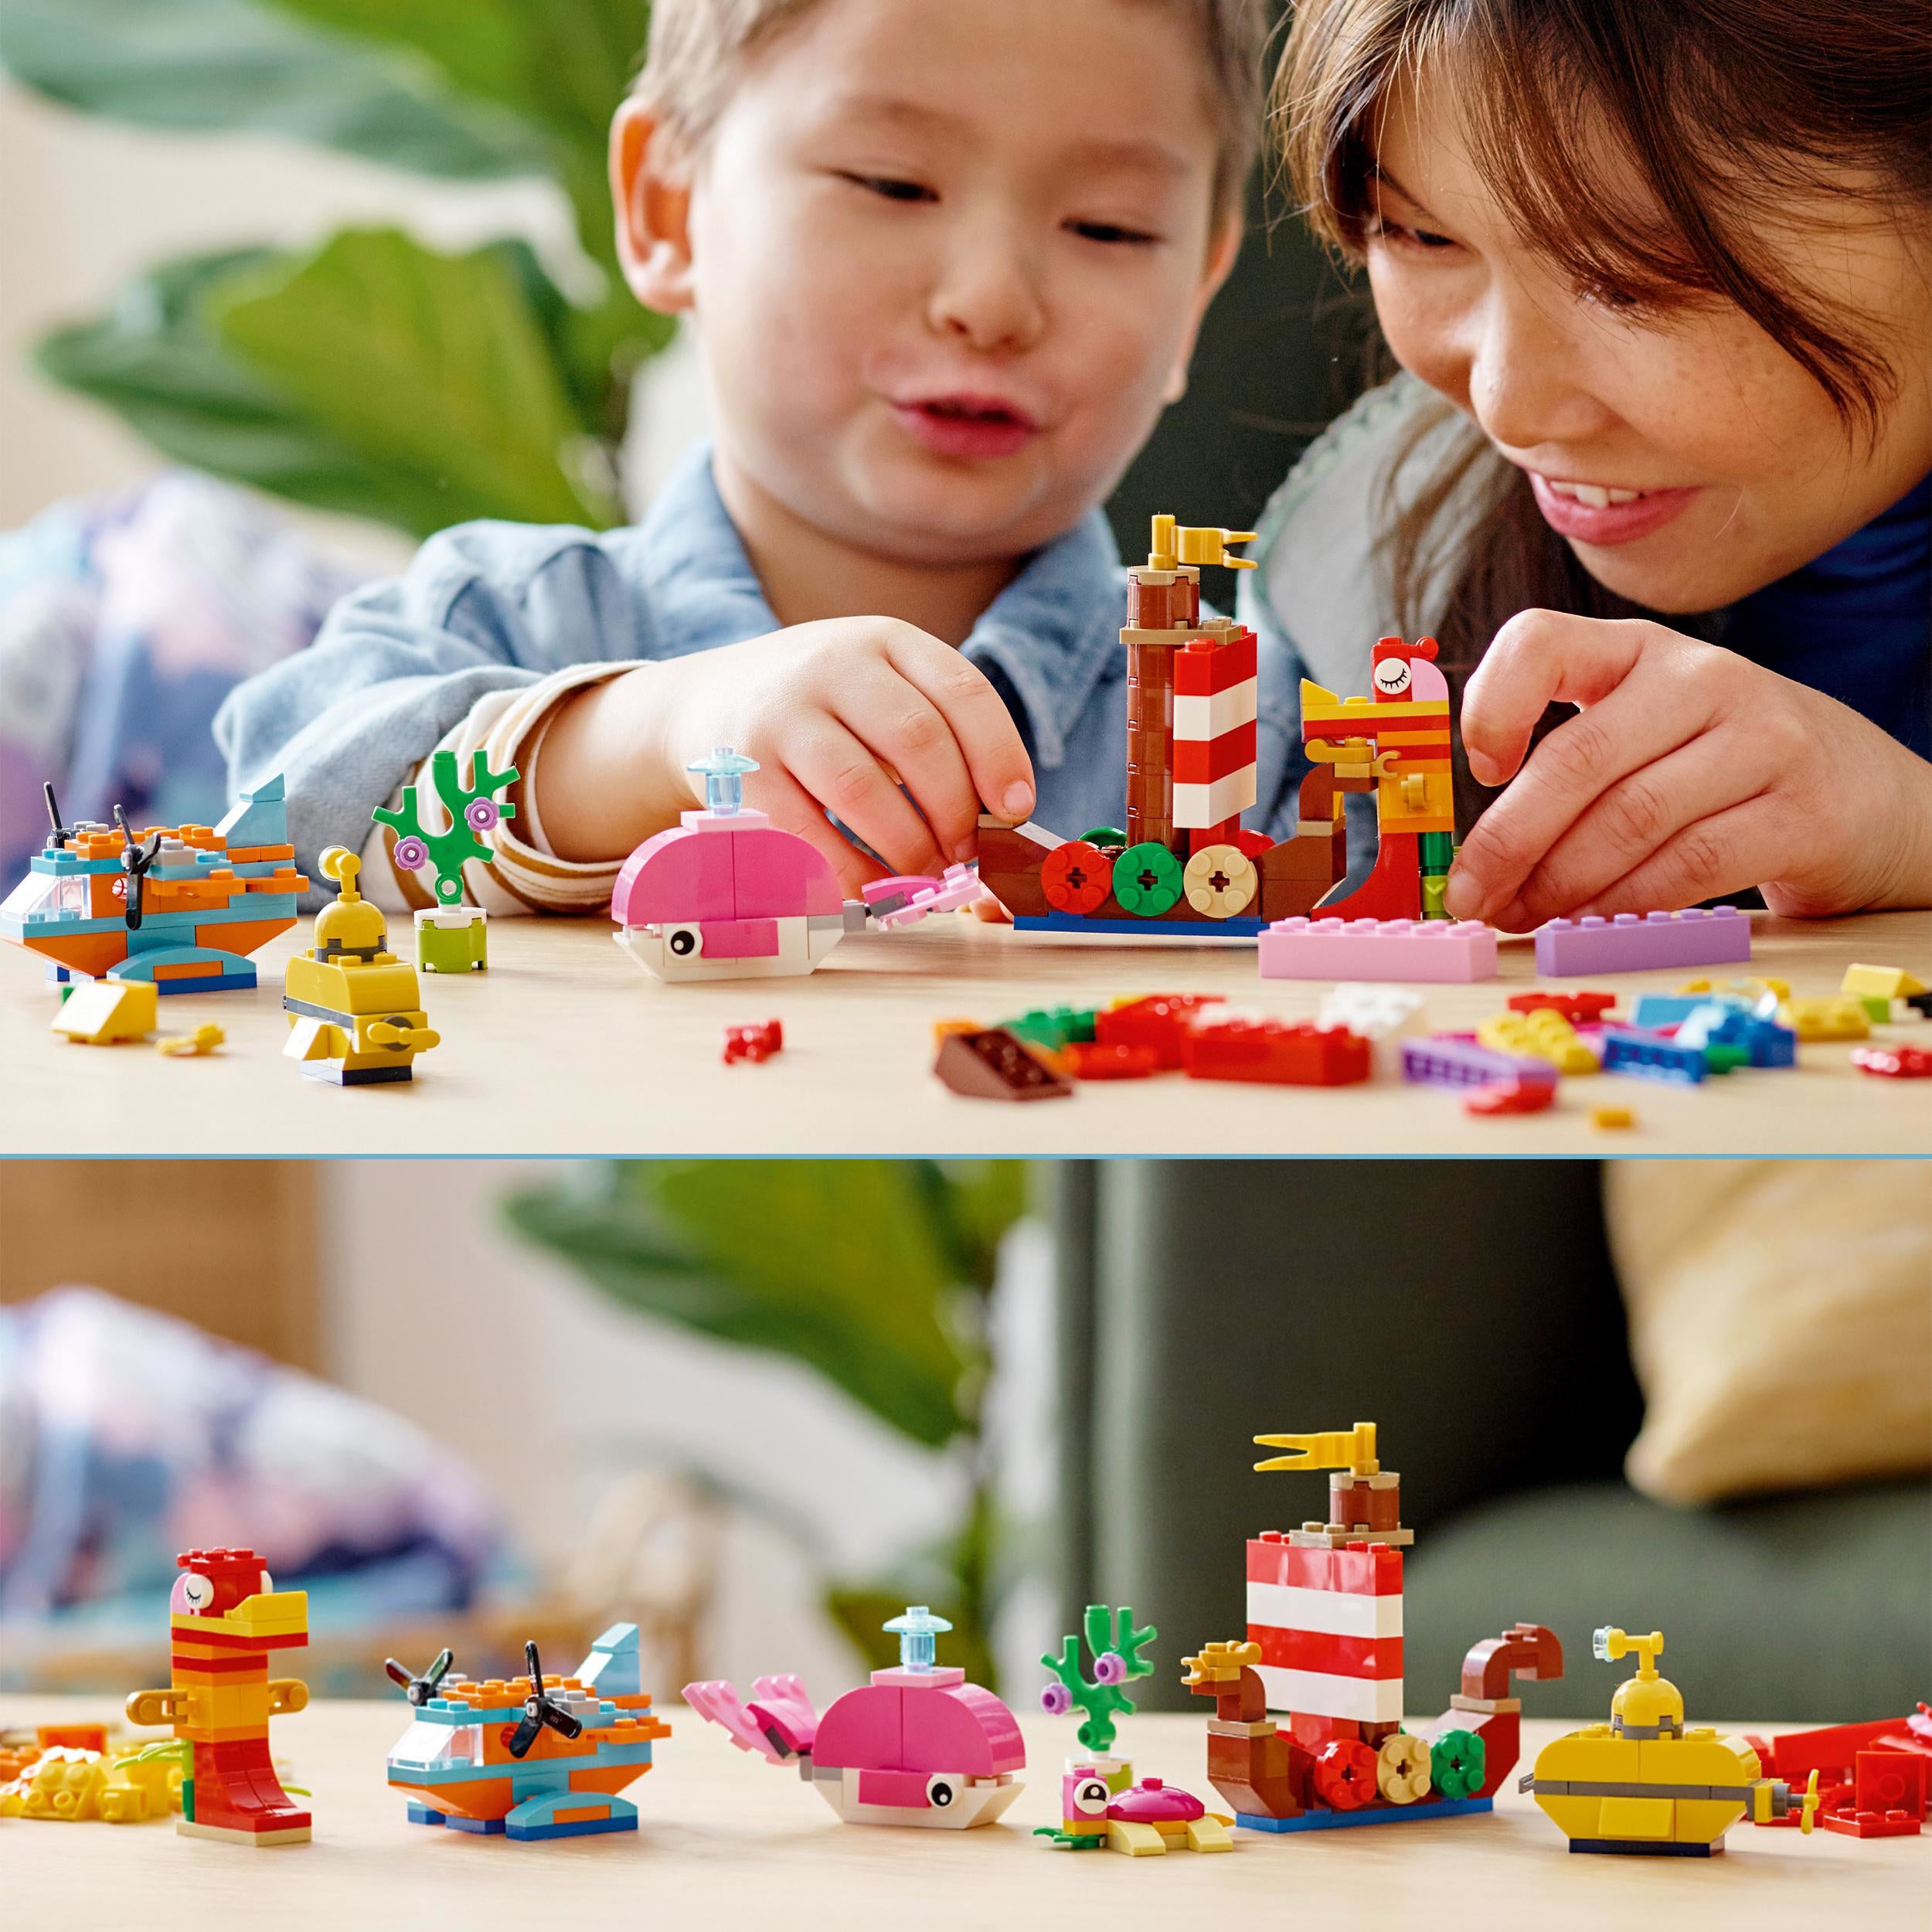 LEGO 11018 Classic Creative Ocean Fun Bricks Box, 6 Mini Builds Set of Ship, Submarine, Seahorse and Turtle Figures, Building Toys for Kids